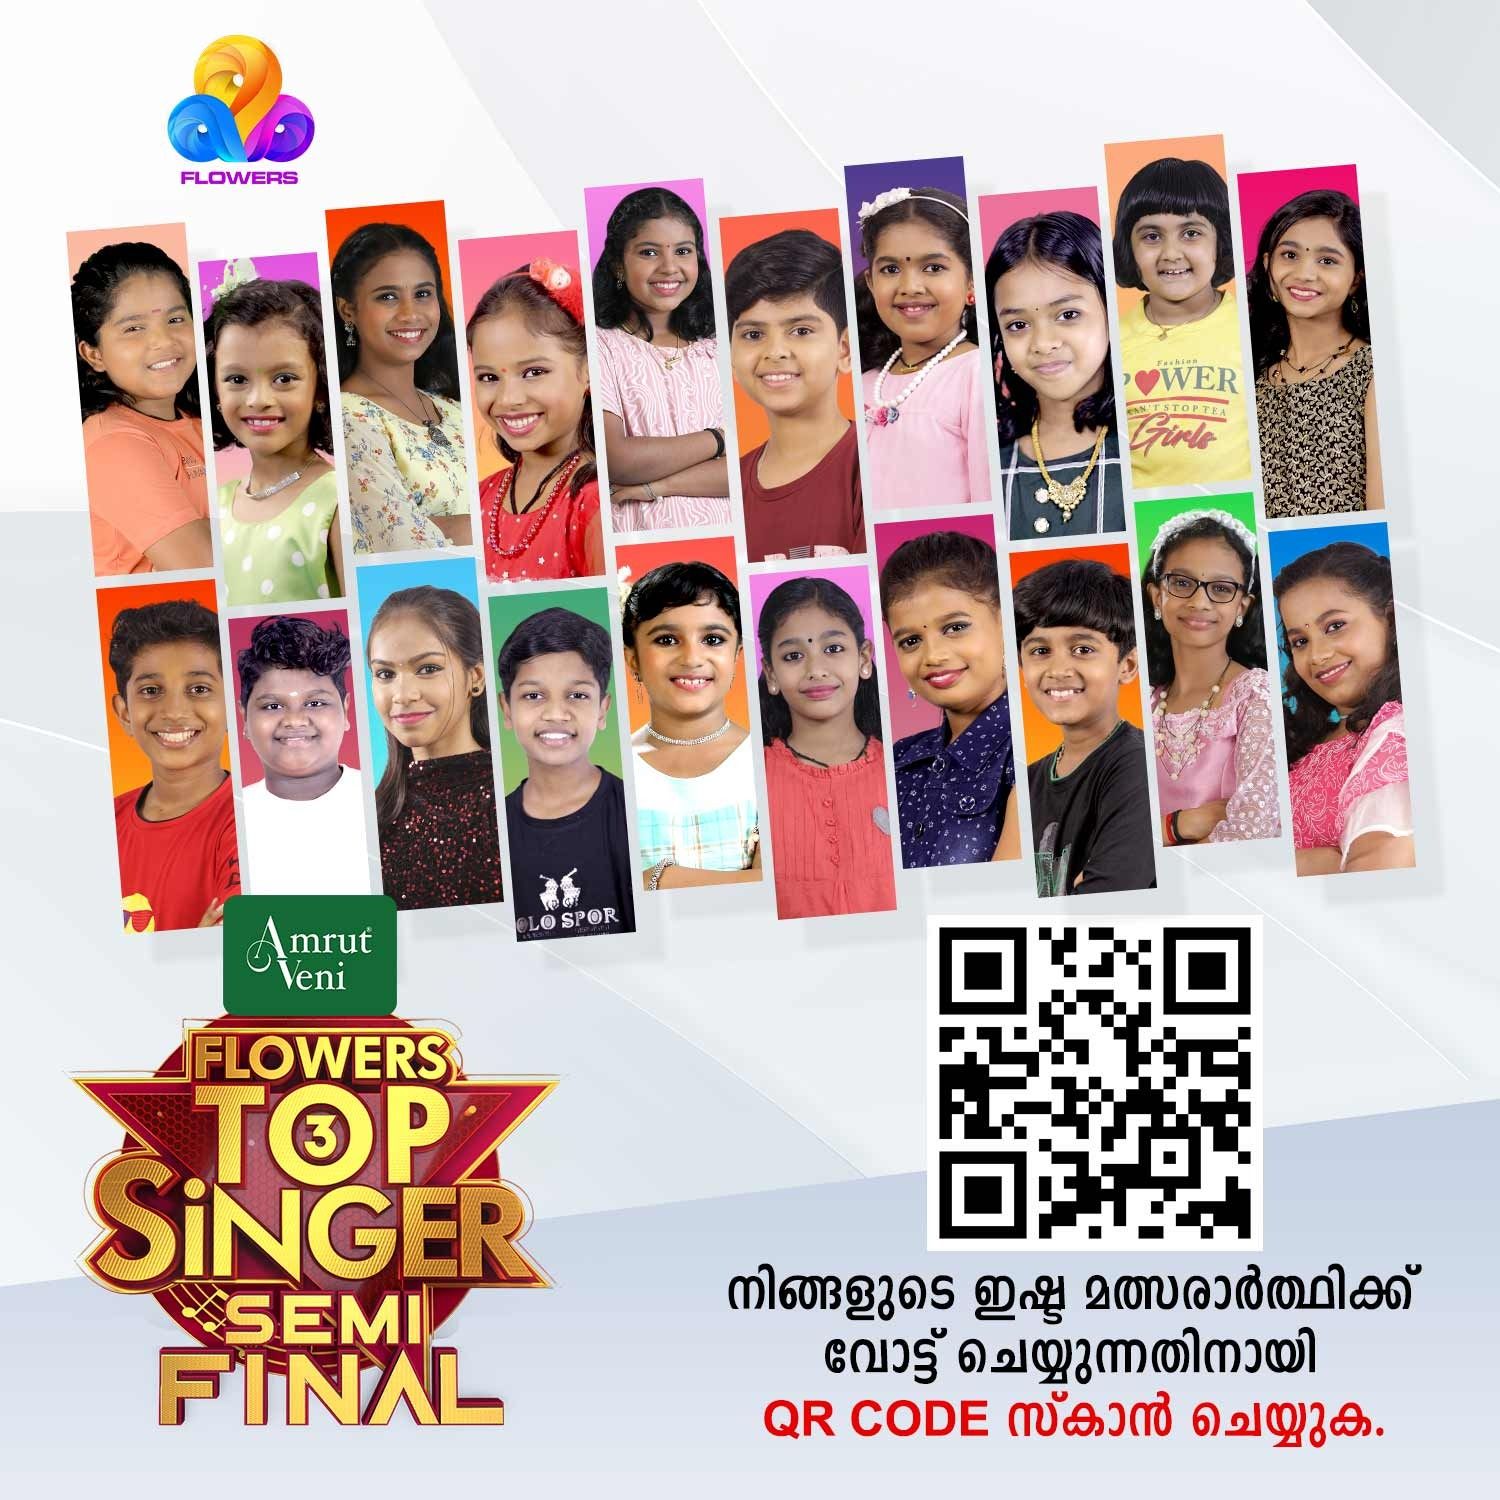 Flowers Top Singer Winner Is Seethalakshmi - Malayalam Musical Reality Show 4